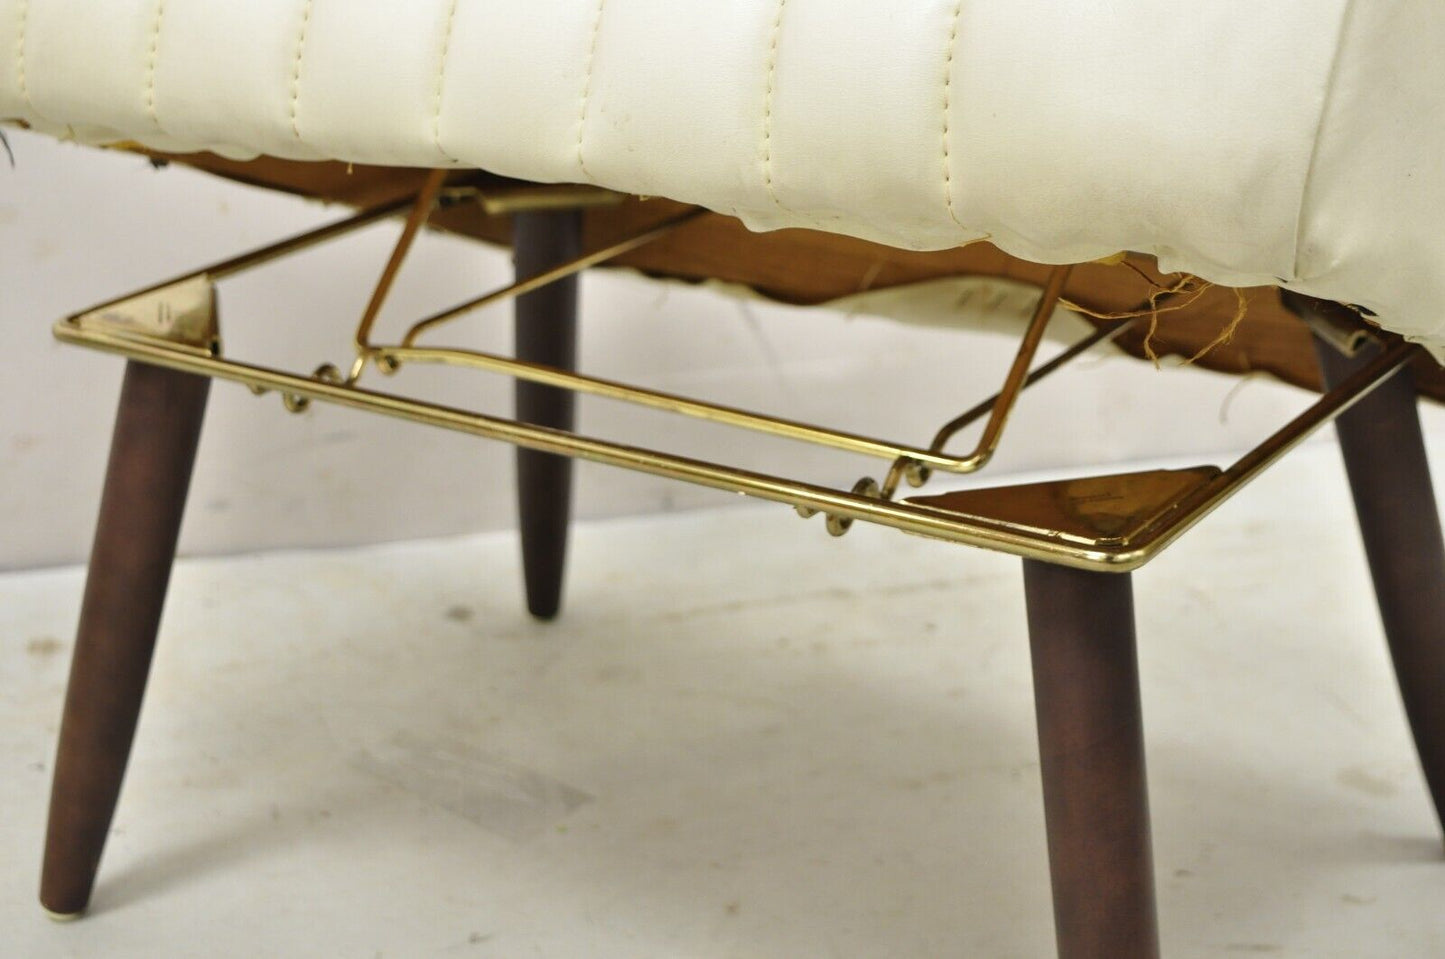 Vintage Mid Century Modern Adjustable Angle Ottoman Footstool with Wooden Legs